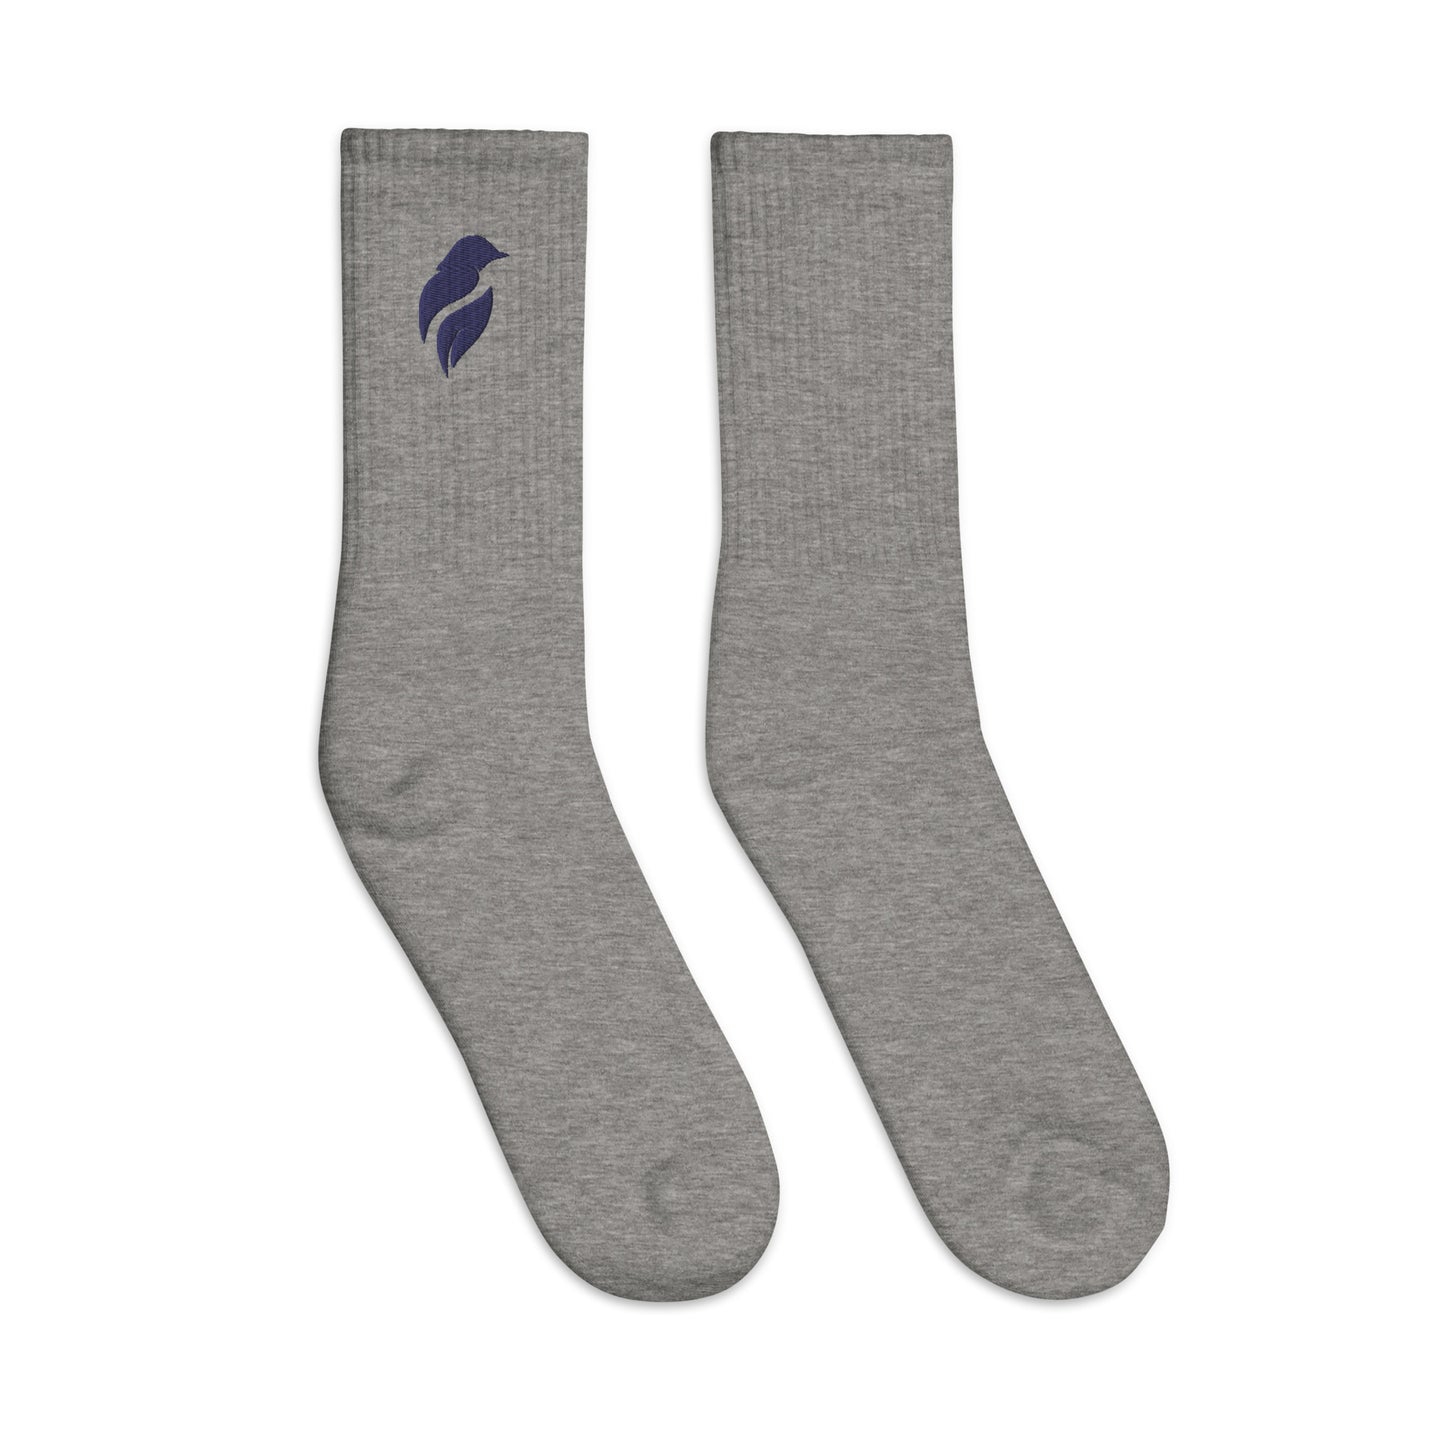 Flyest Embroidered socks